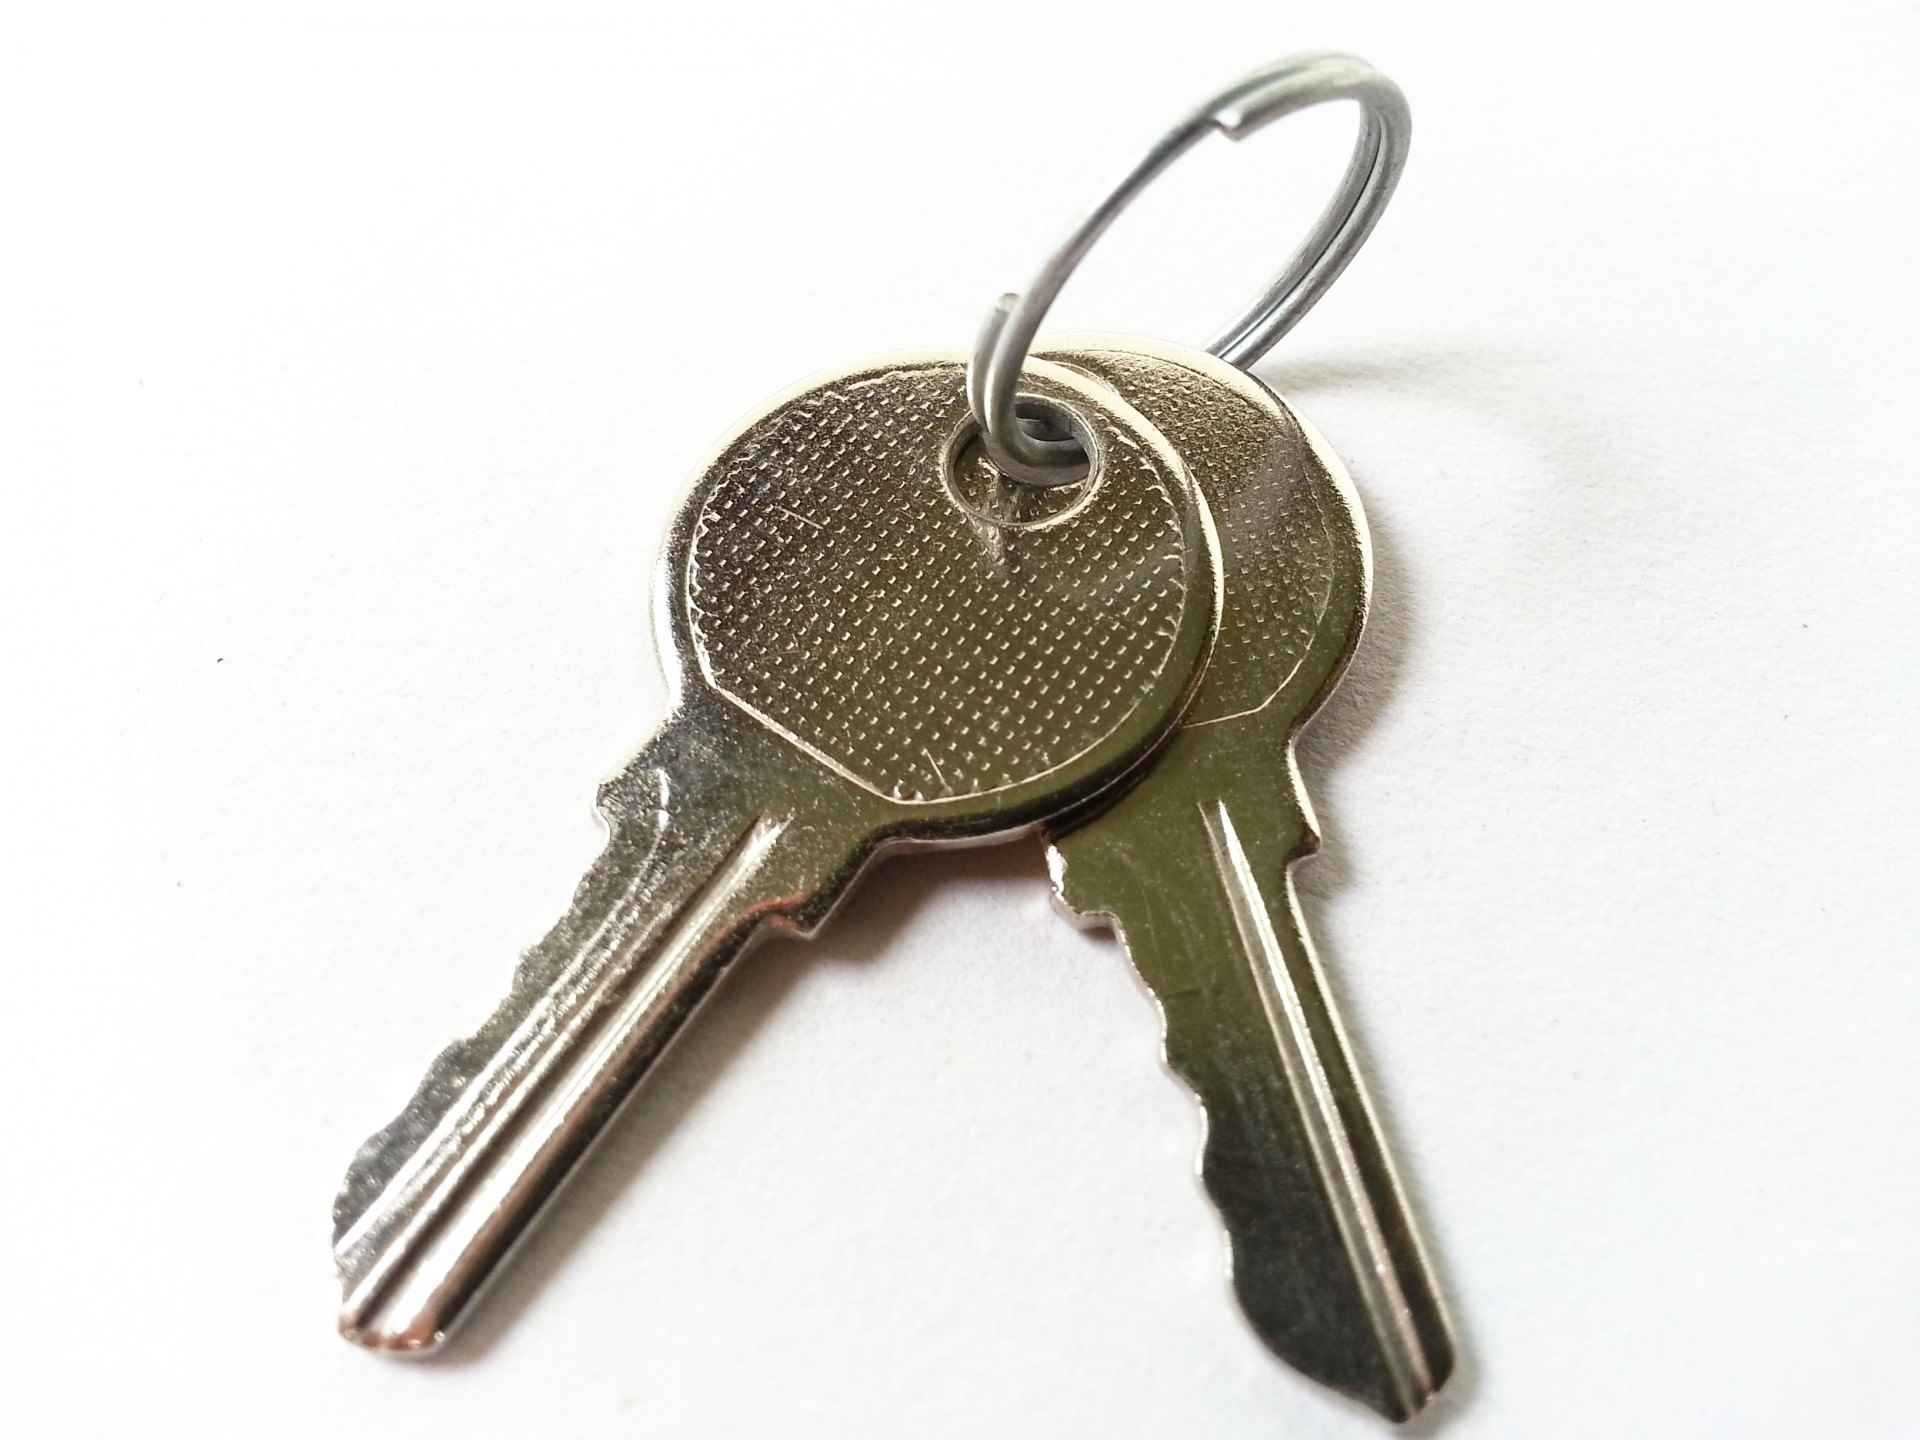 Ключи стучи. Ключ ul-4 замок дверной. Ключи от квартиры связка. Современный ключ. Изображение ключа.